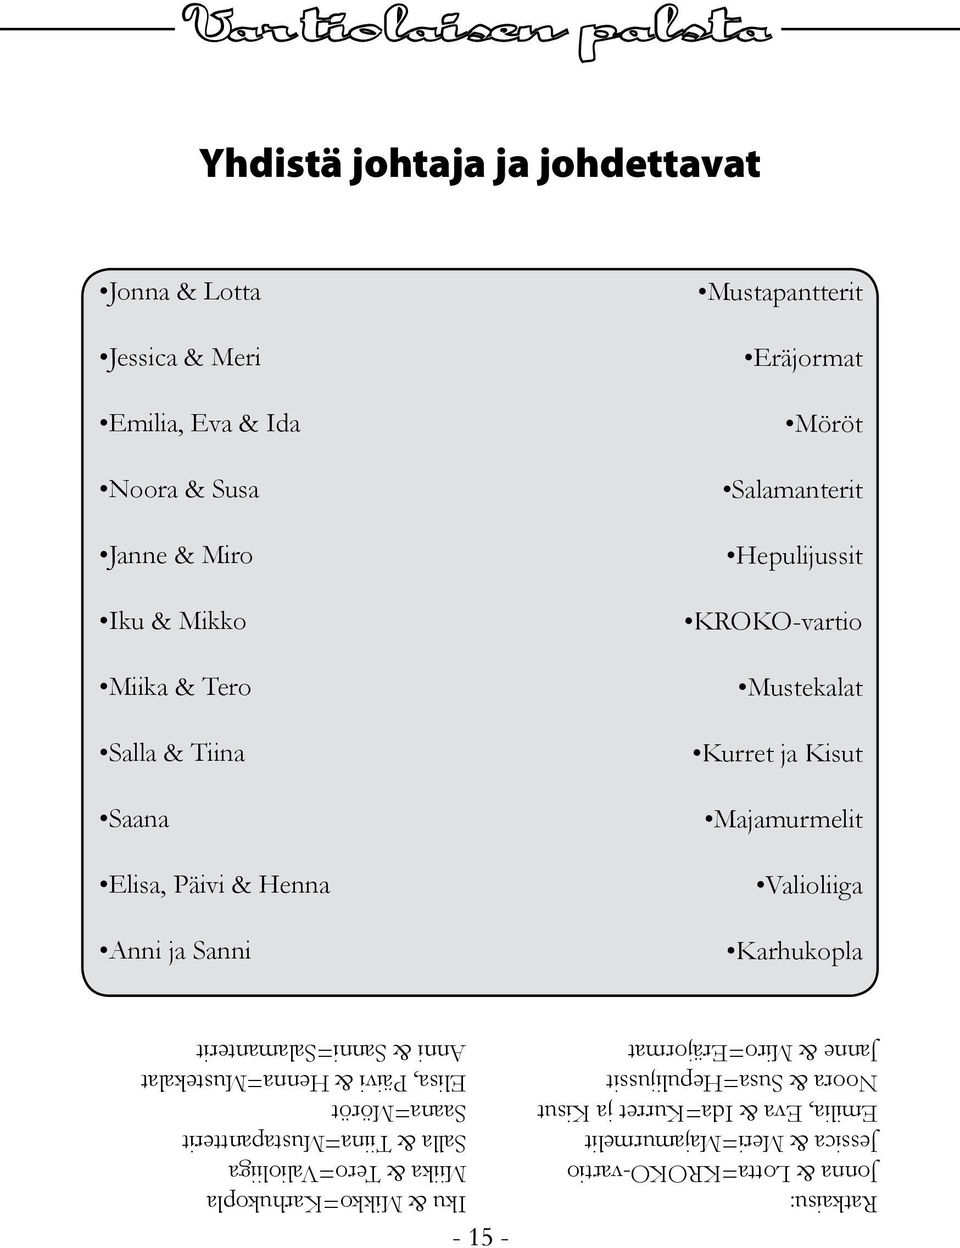 Valioliiga Karhukopla Iku & Mikko=Karhukopla Miika & Tero=Valioliiga Salla & Tiina=Mustapantterit Saana=Möröt Elisa, Päivi & Henna=Mustekalat Anni &